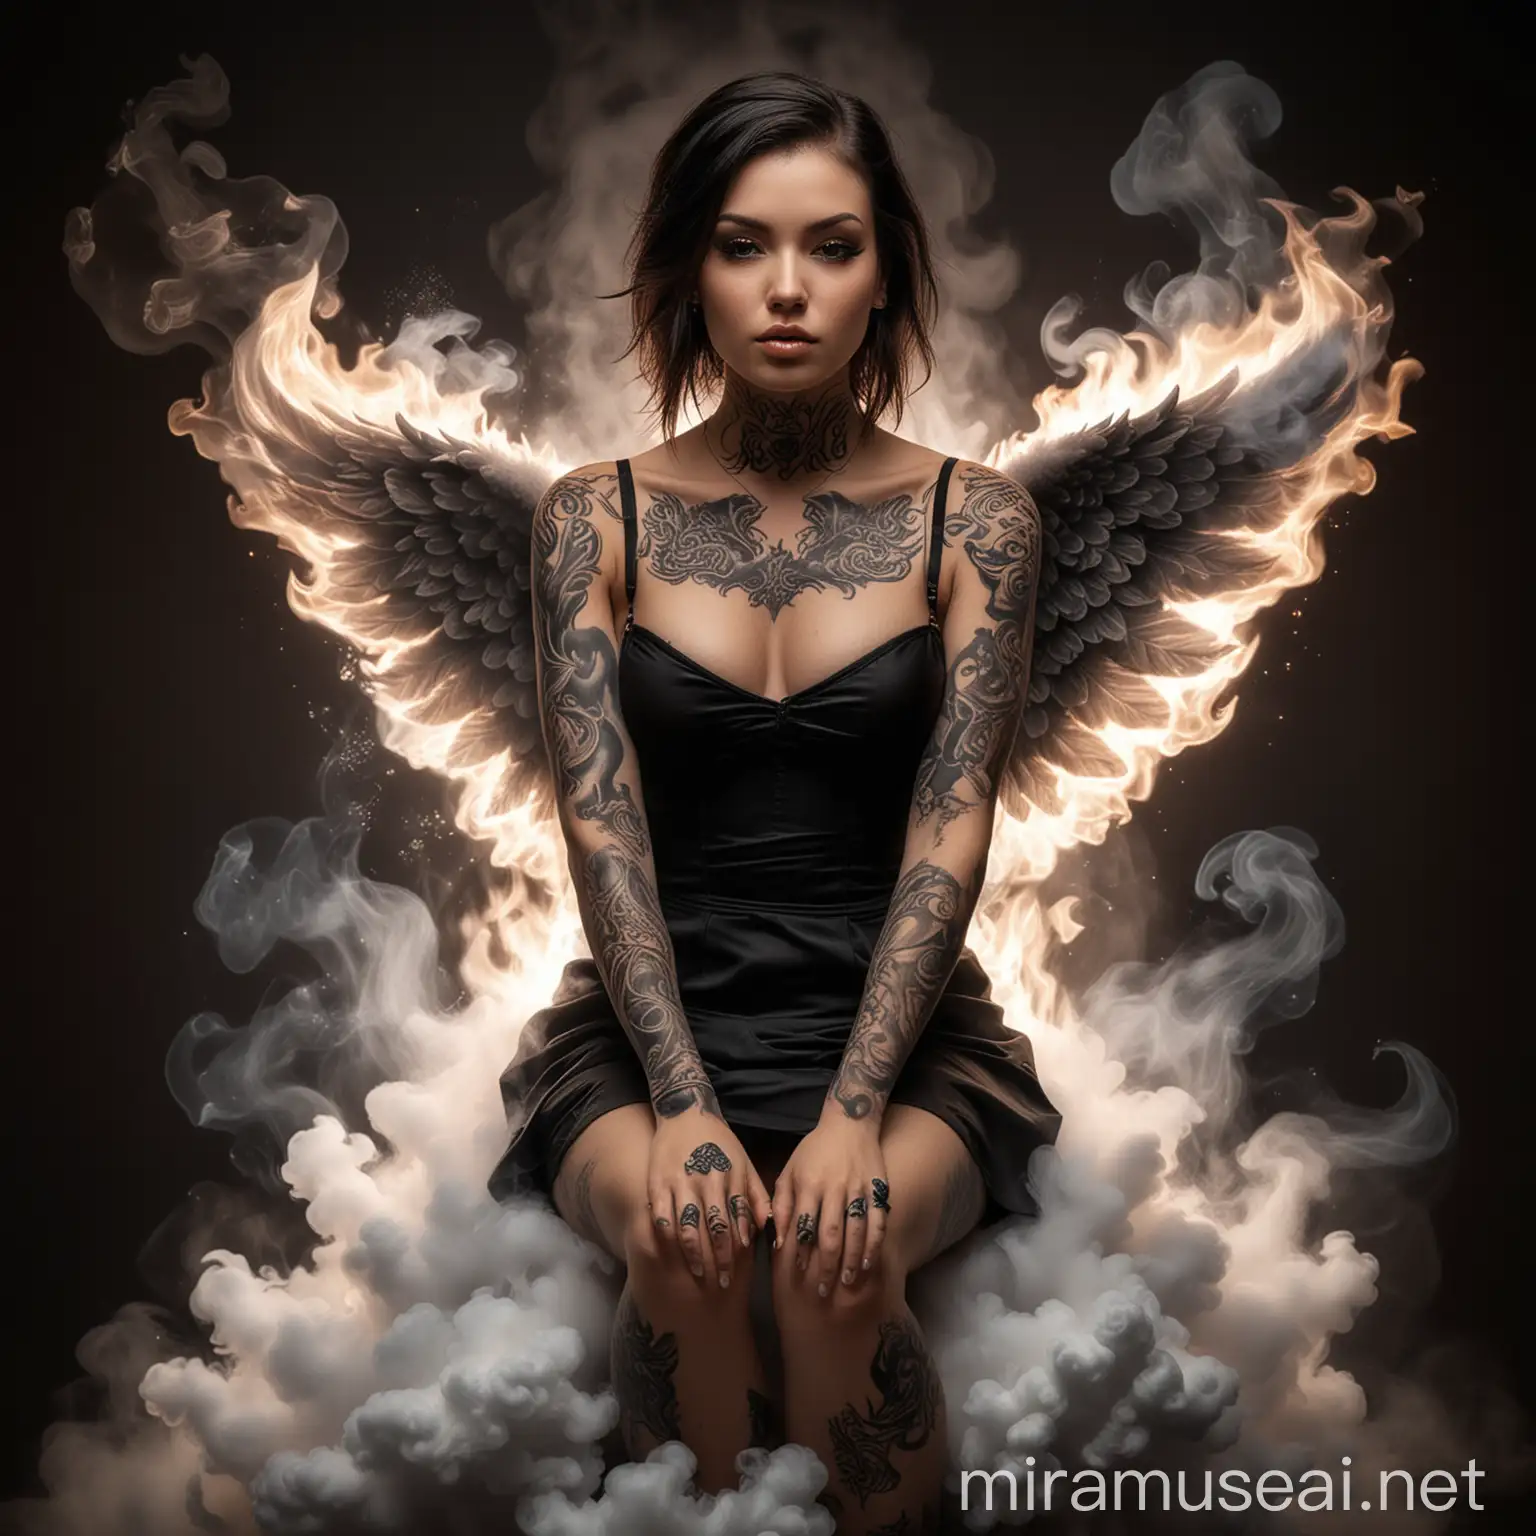 Tattooed Angel in Black Mini Dress on Smoky Flames